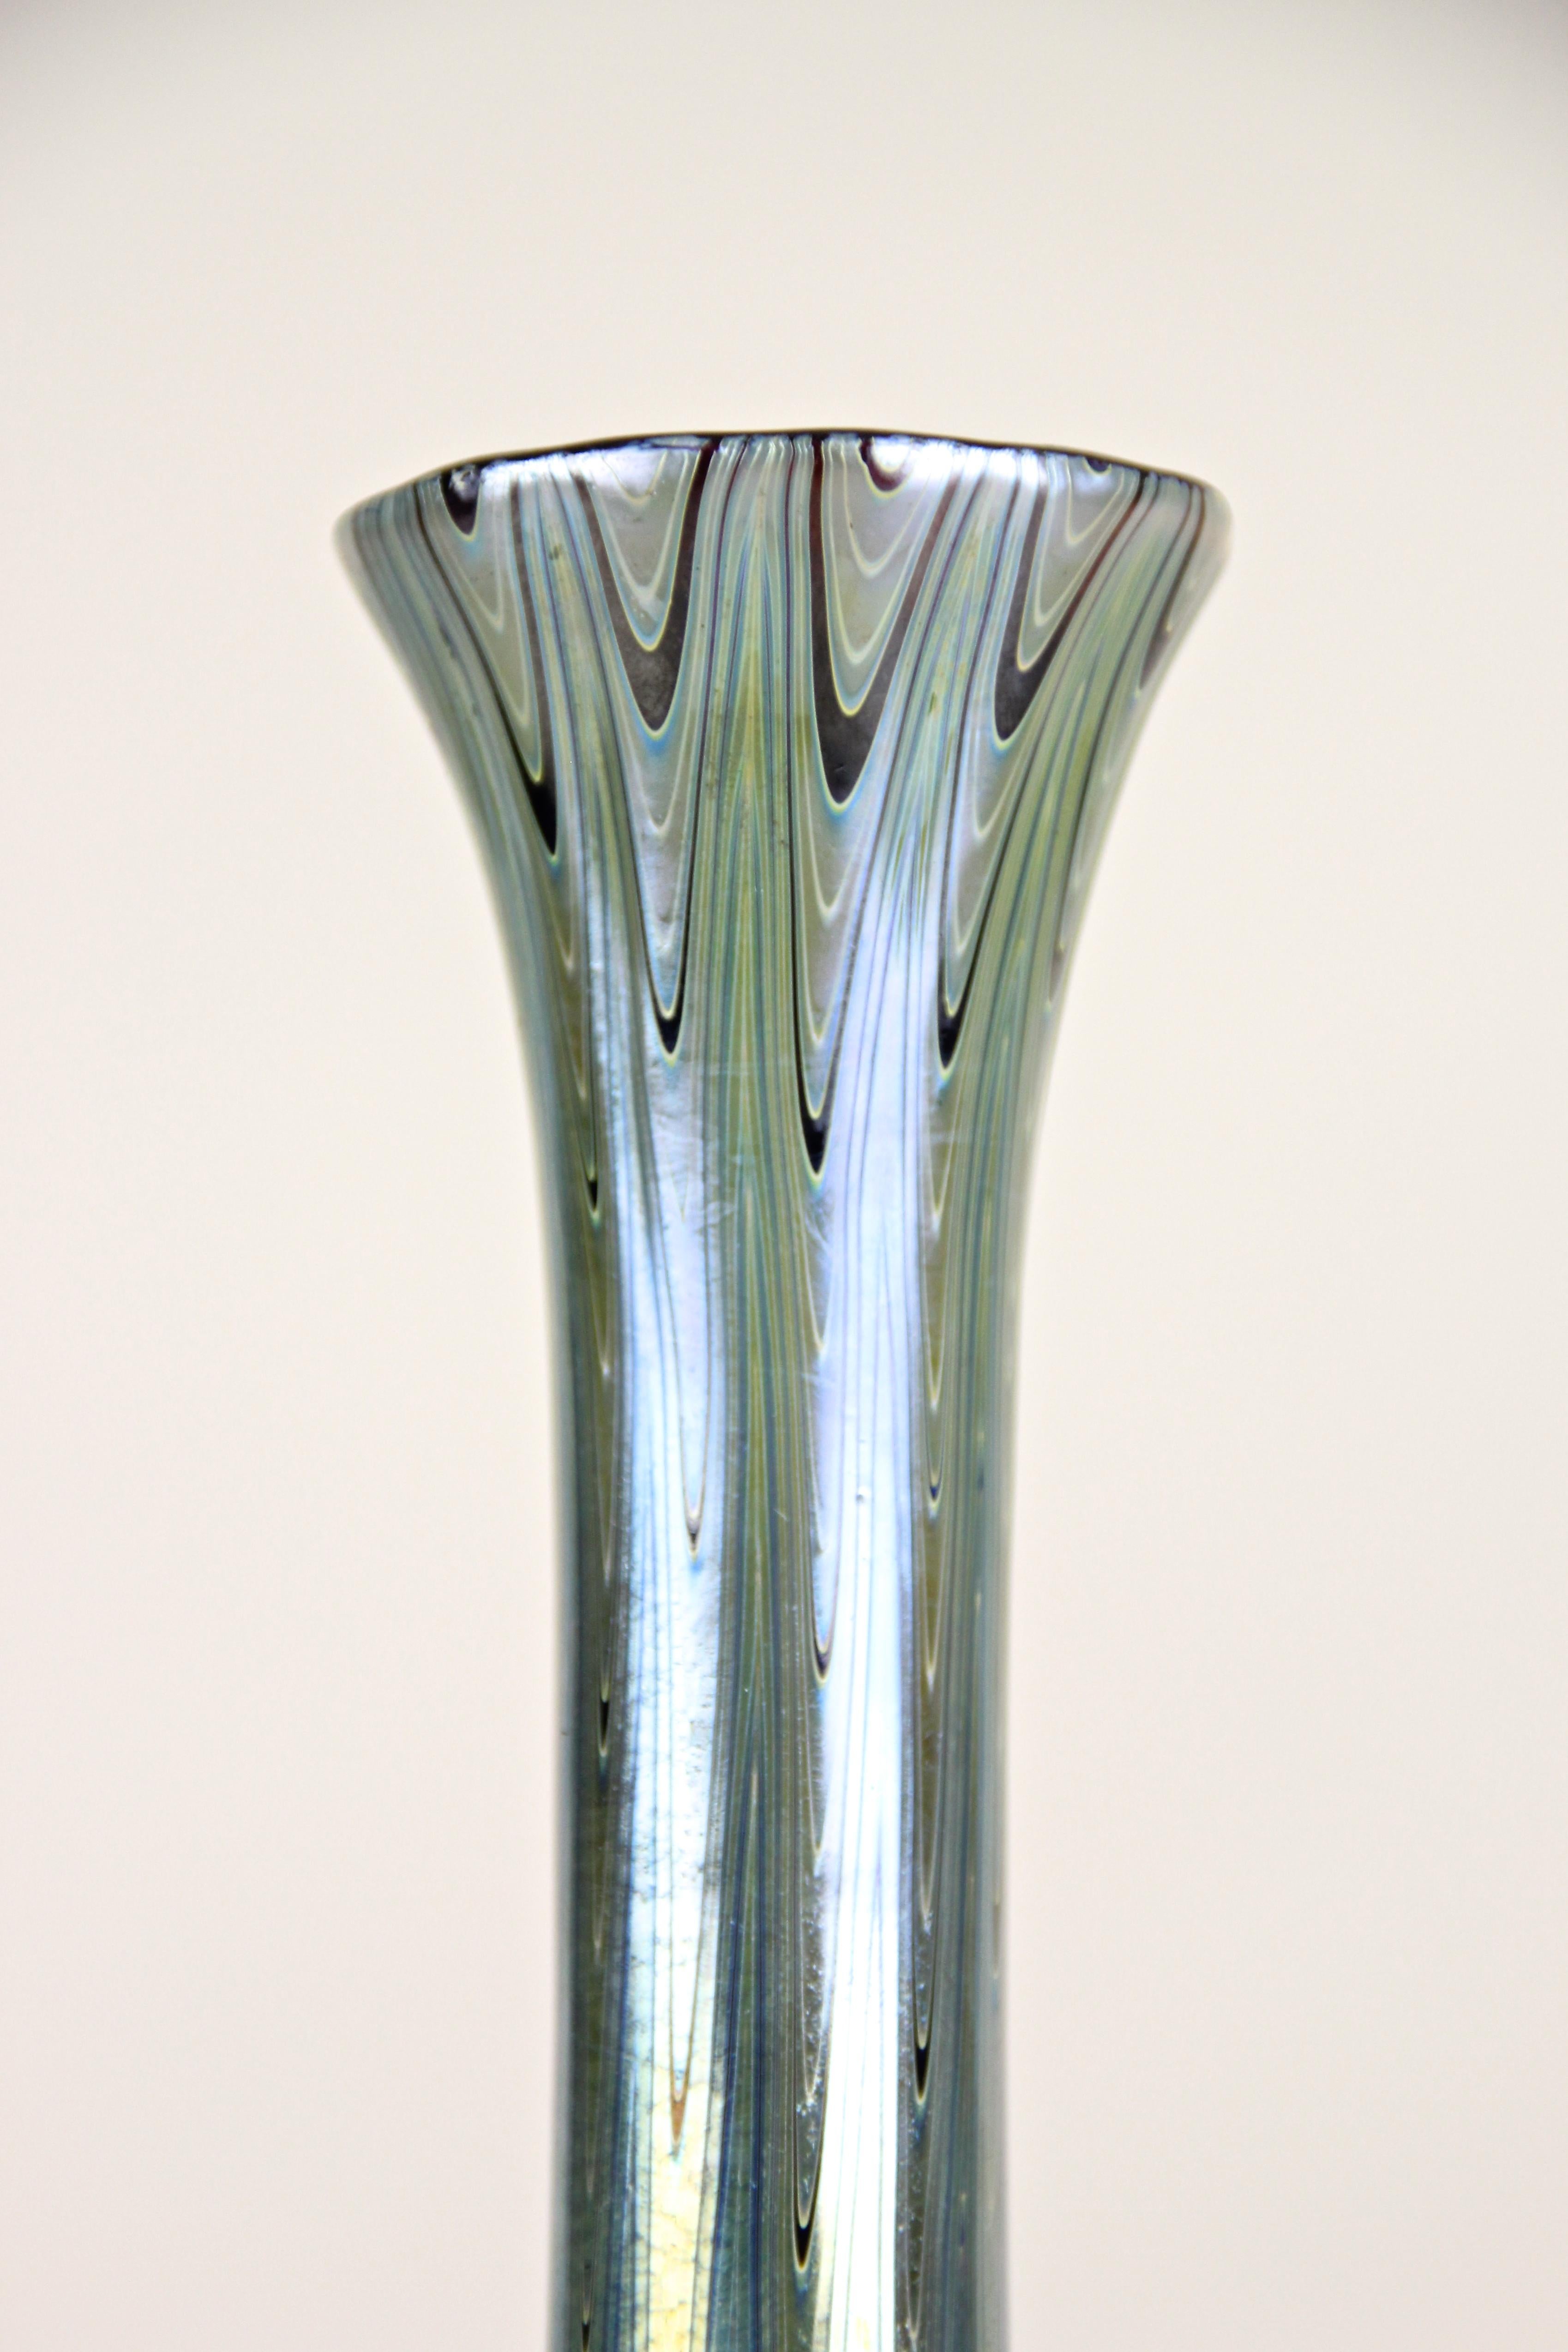 Blown Glass Loetz Witwe Glass Vase Rubin Phänomen Genre 6893 Iriscident, Bohemia, circa 1899 For Sale